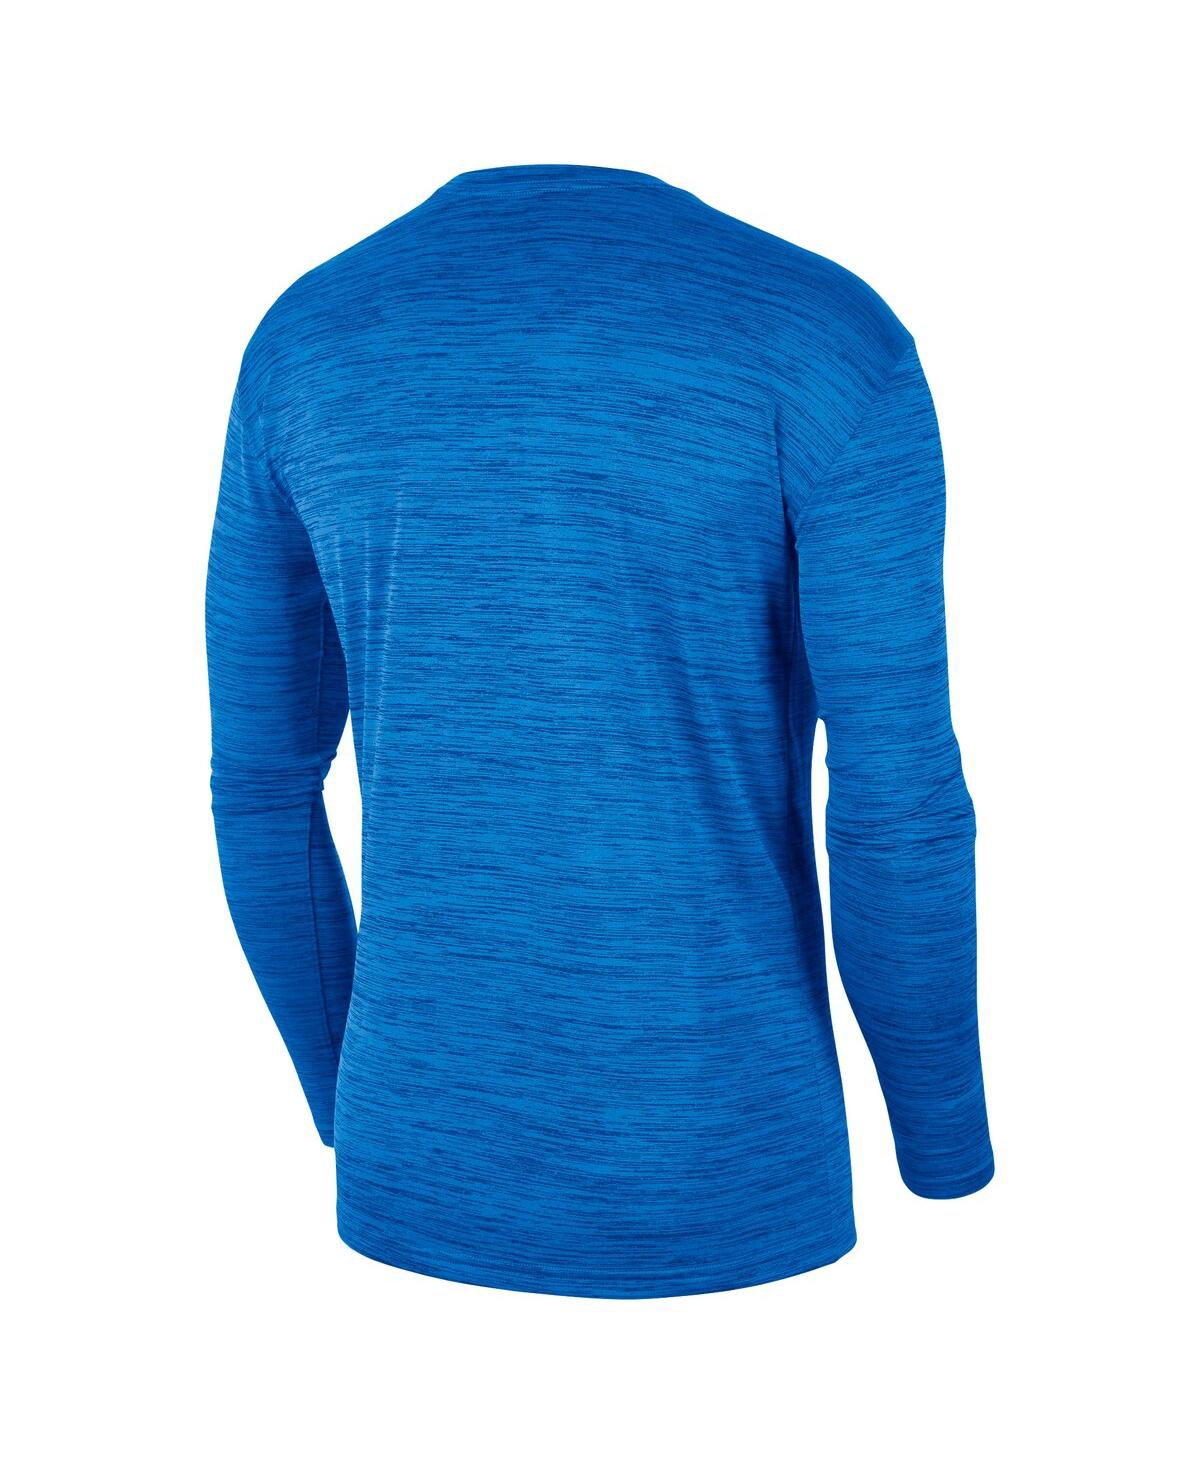 Shop Jordan Men's  Blue Ucla Bruins Team Velocity Performance Long Sleeve T-shirt